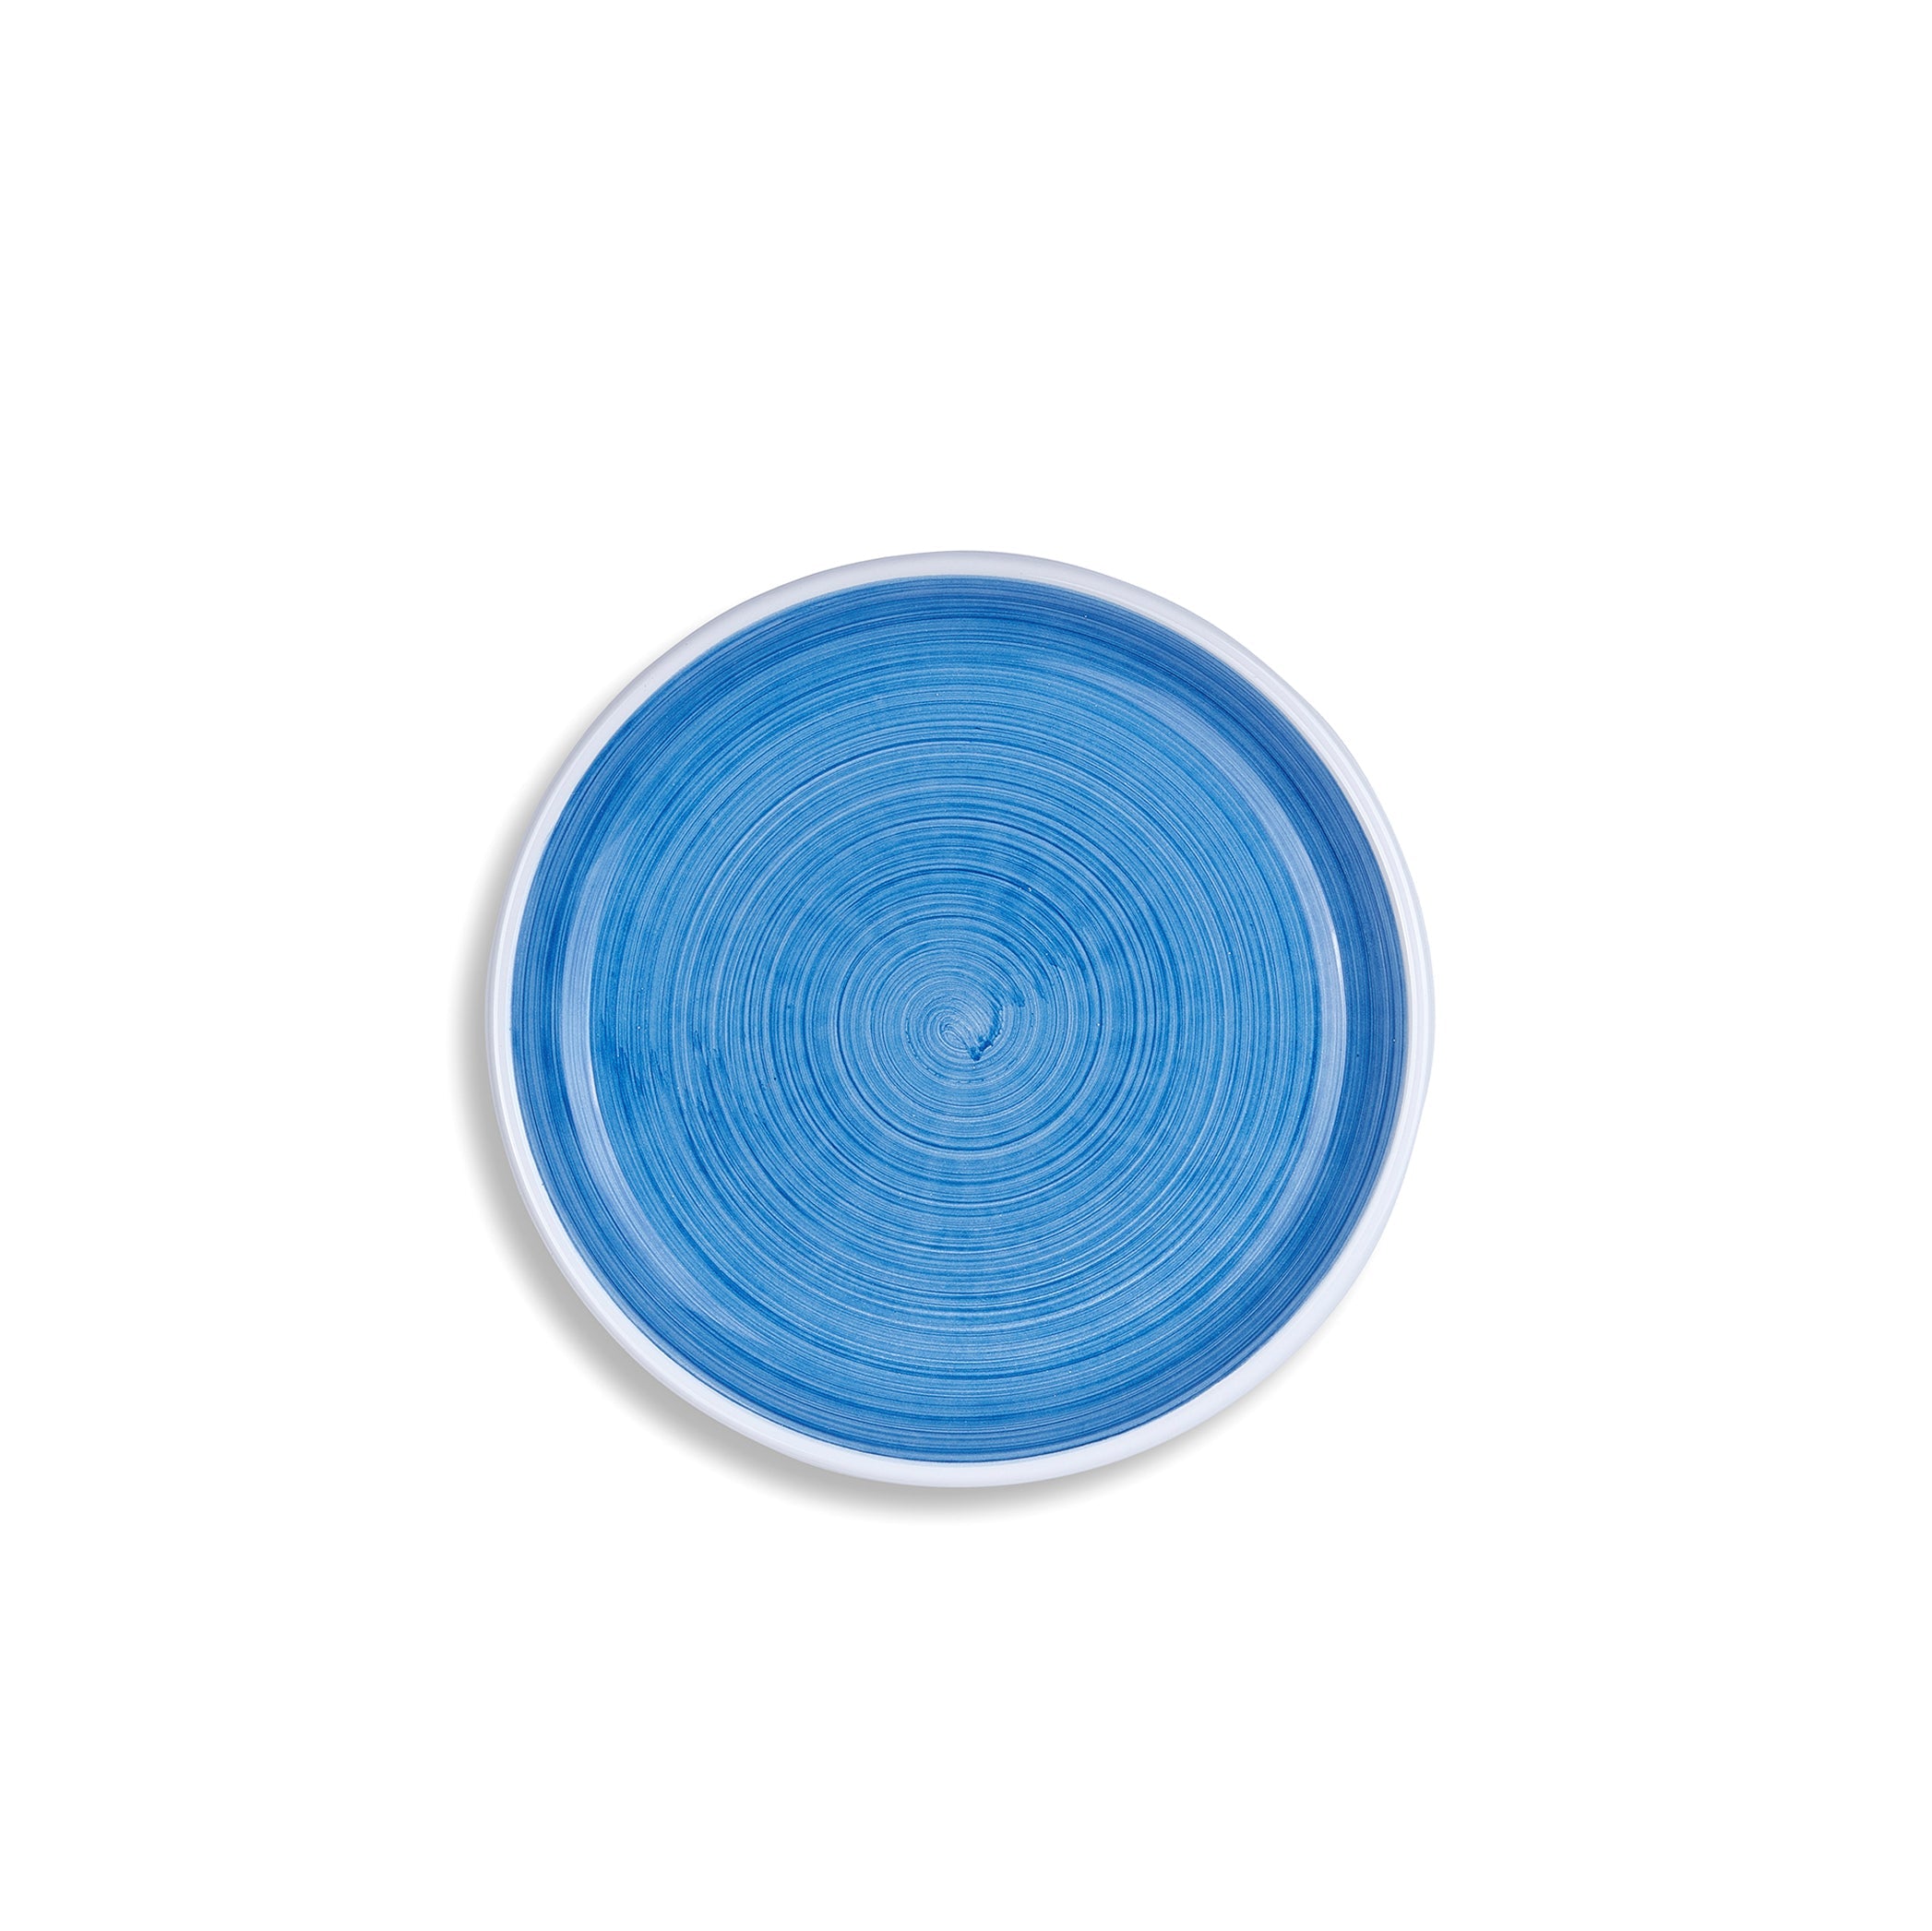 S&B 'Brushed' Ceramic Side Plate in Light Blue, 21cm